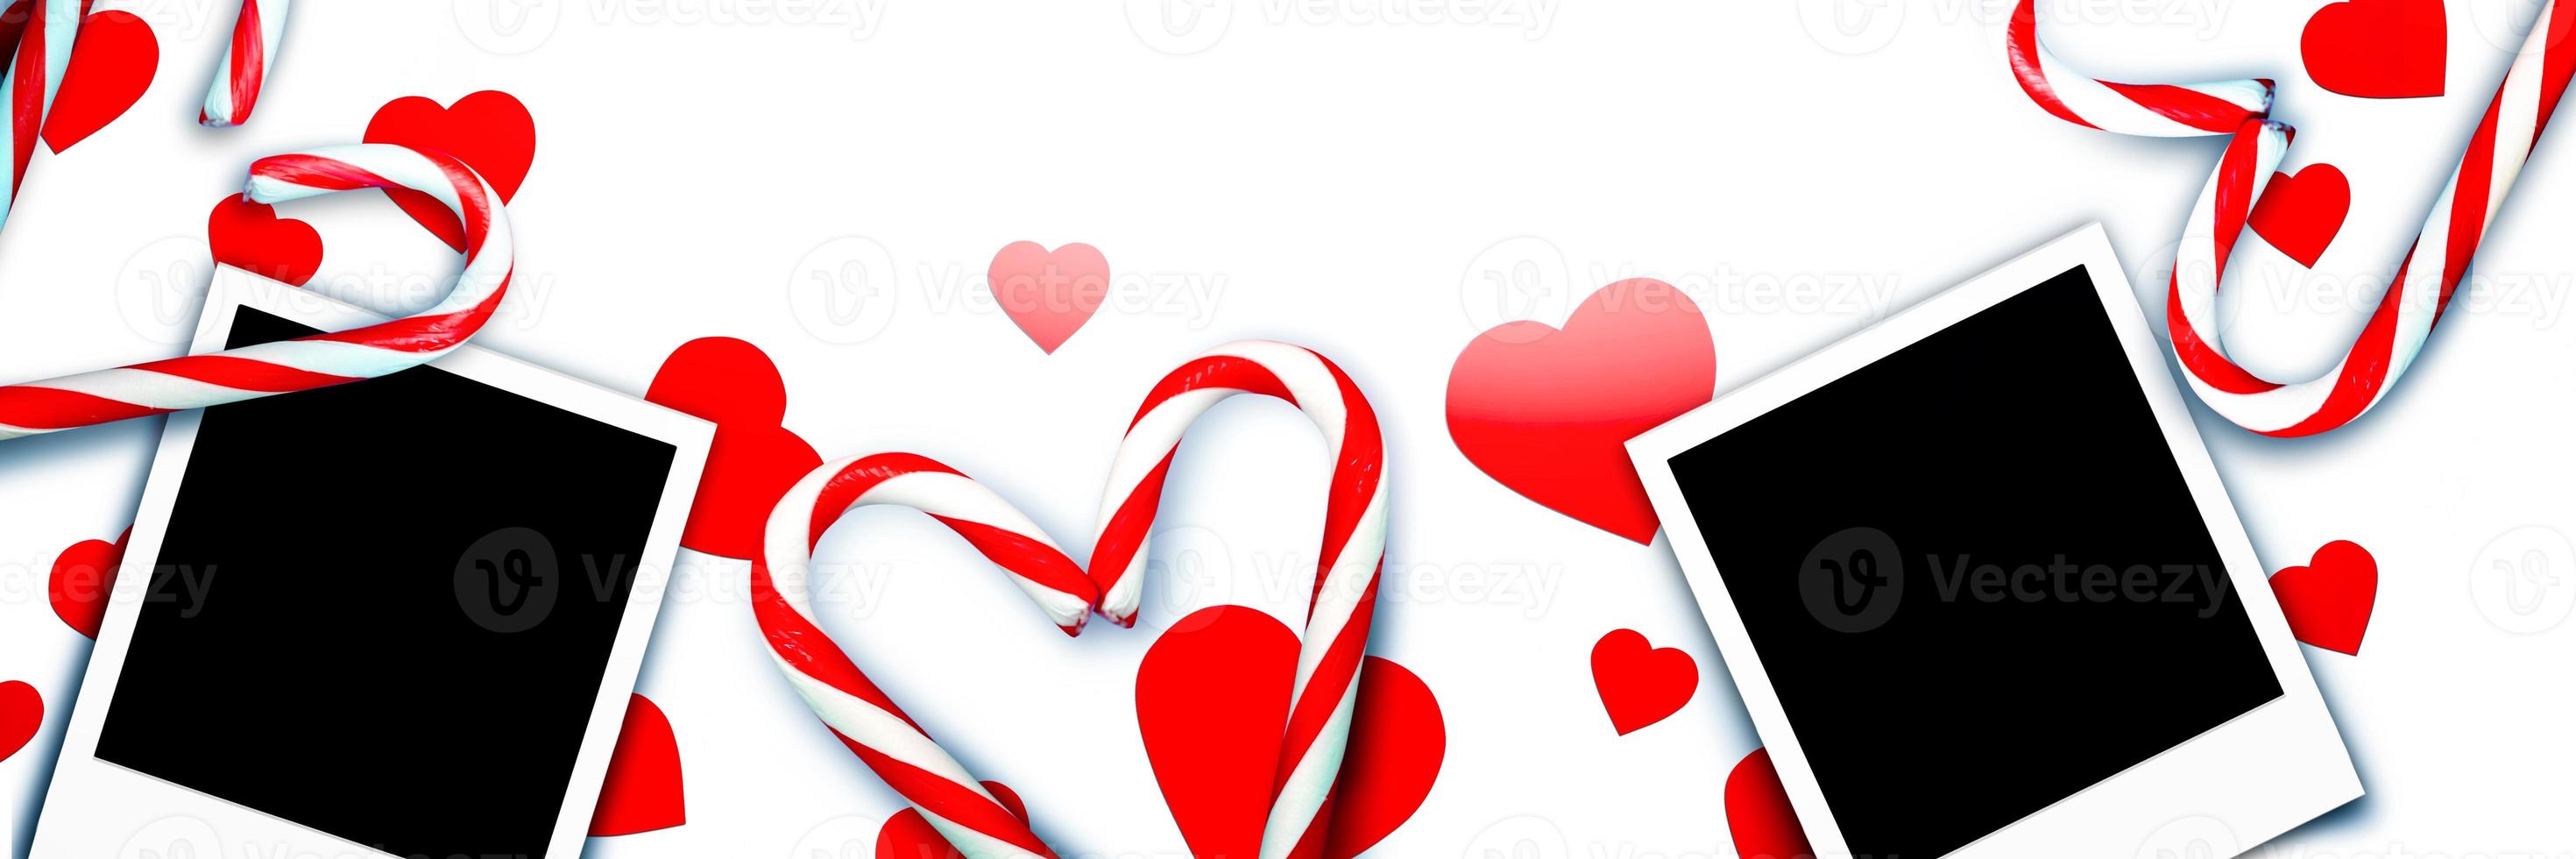 Happy Valentine's Day background. Love and Valentine's Day concept. photo